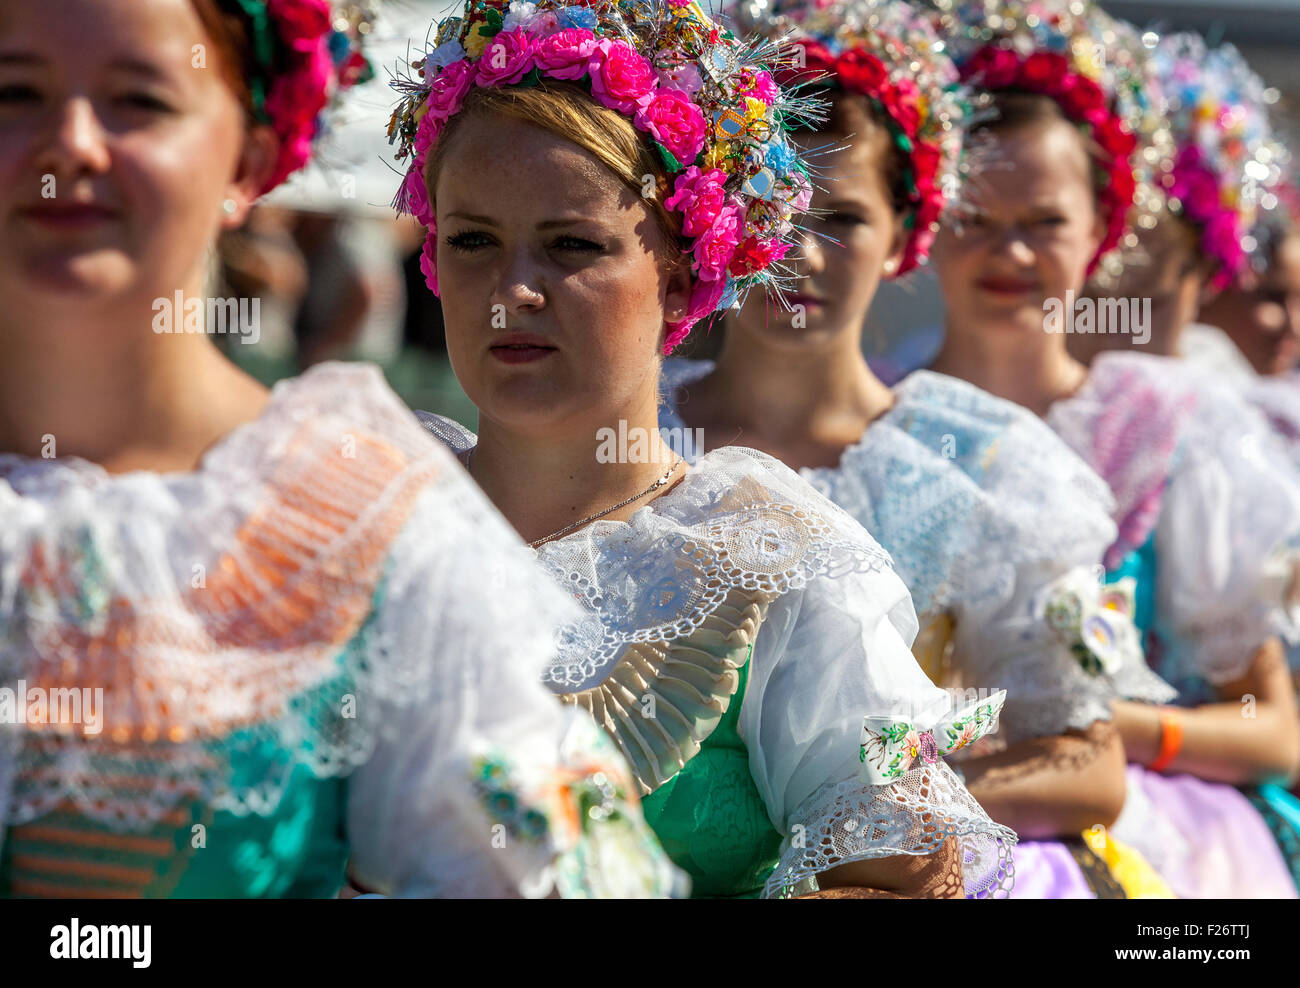 Women in folk costumes, Moravian folklore Velke Pavlovice, South Moravia, Czech Republic festival Stock Photo